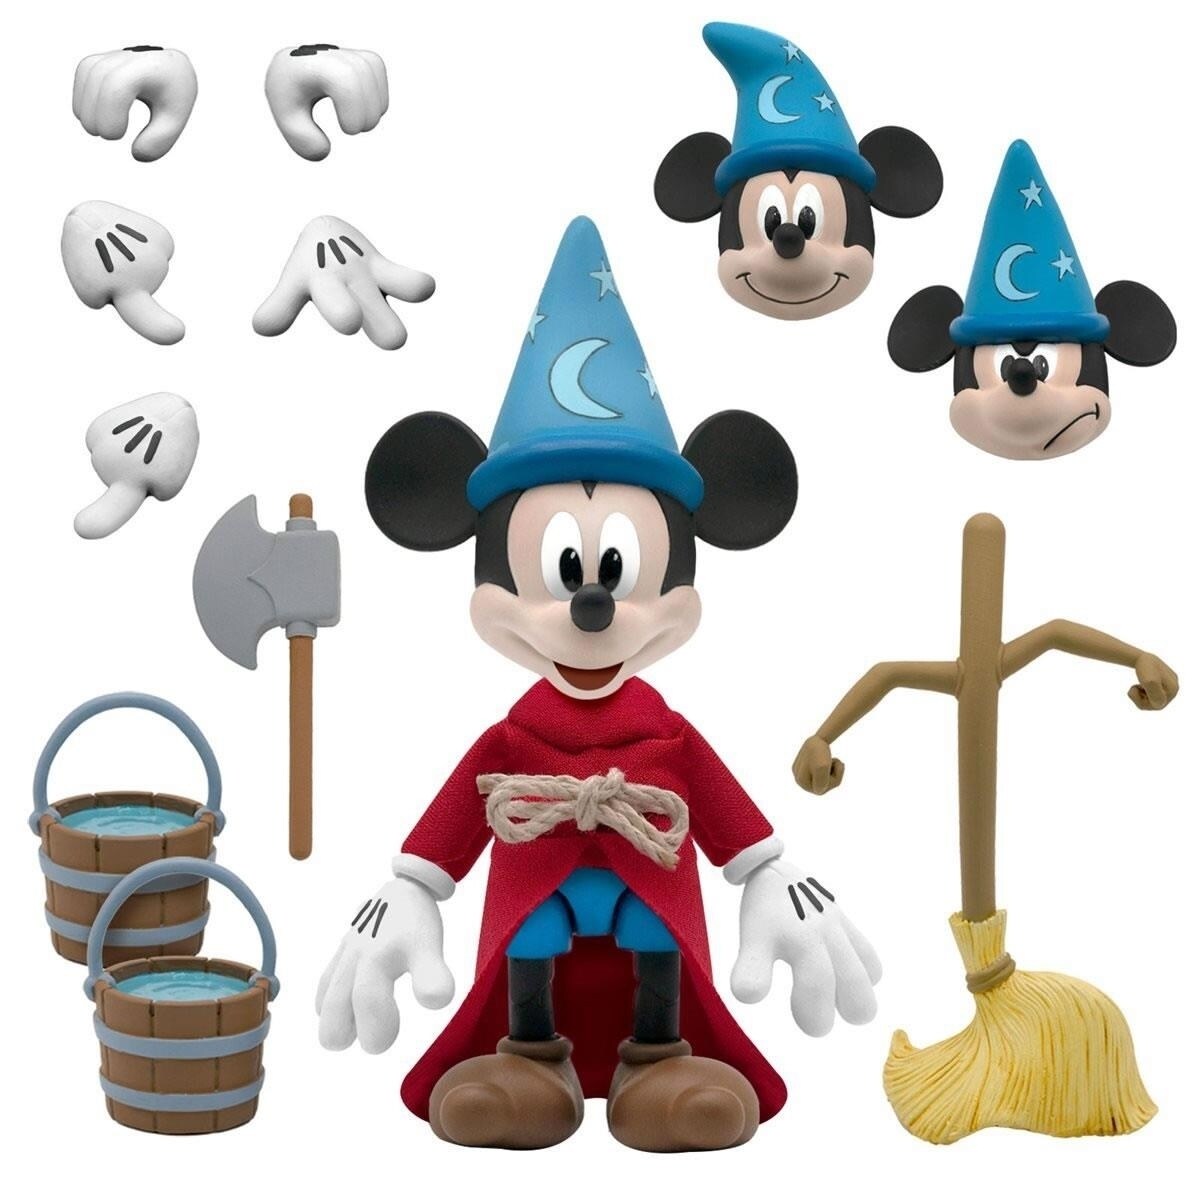 Super7 Disney Fantasia Sorcerers Apprentice Mickey Mouse Ultimates Action Figure